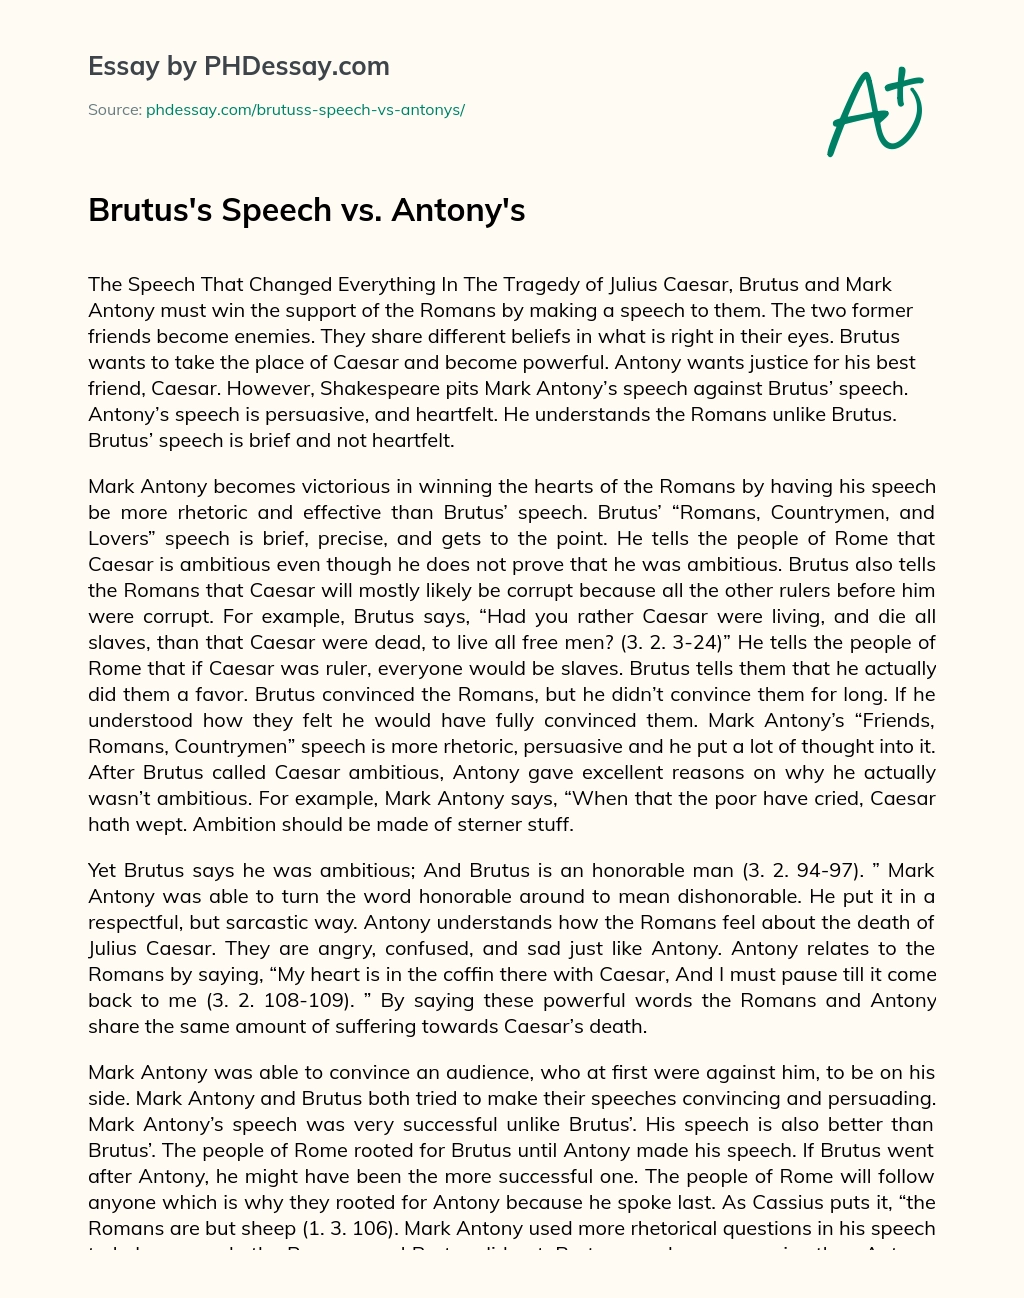 Brutus’s Speech vs. Antony’s essay